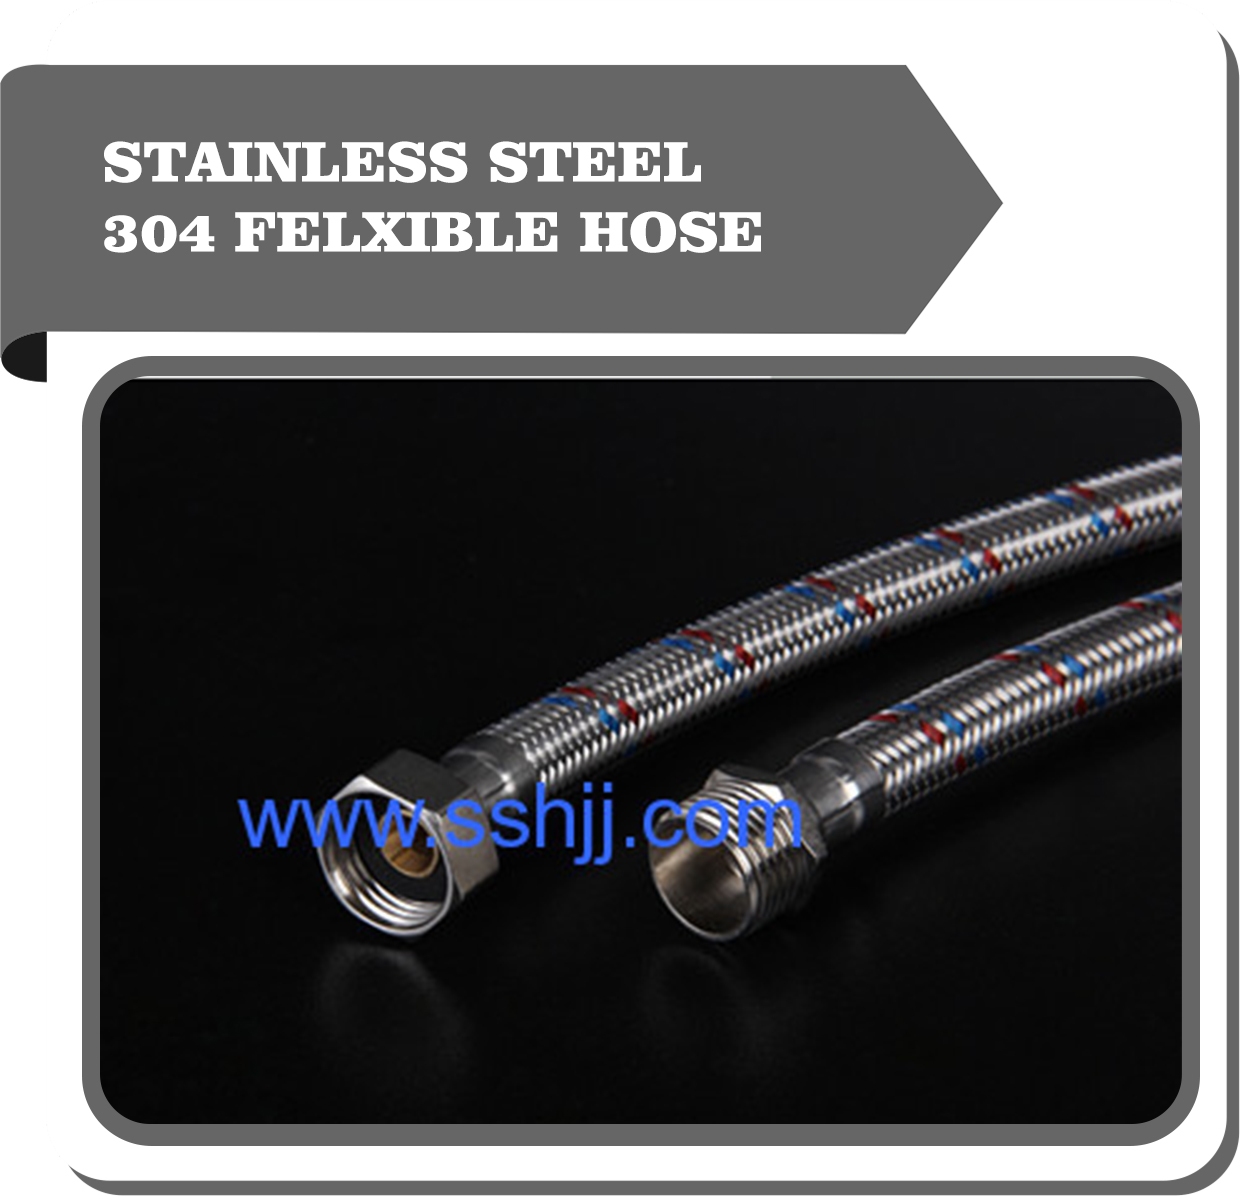 Stainless steel 304 felxible hose